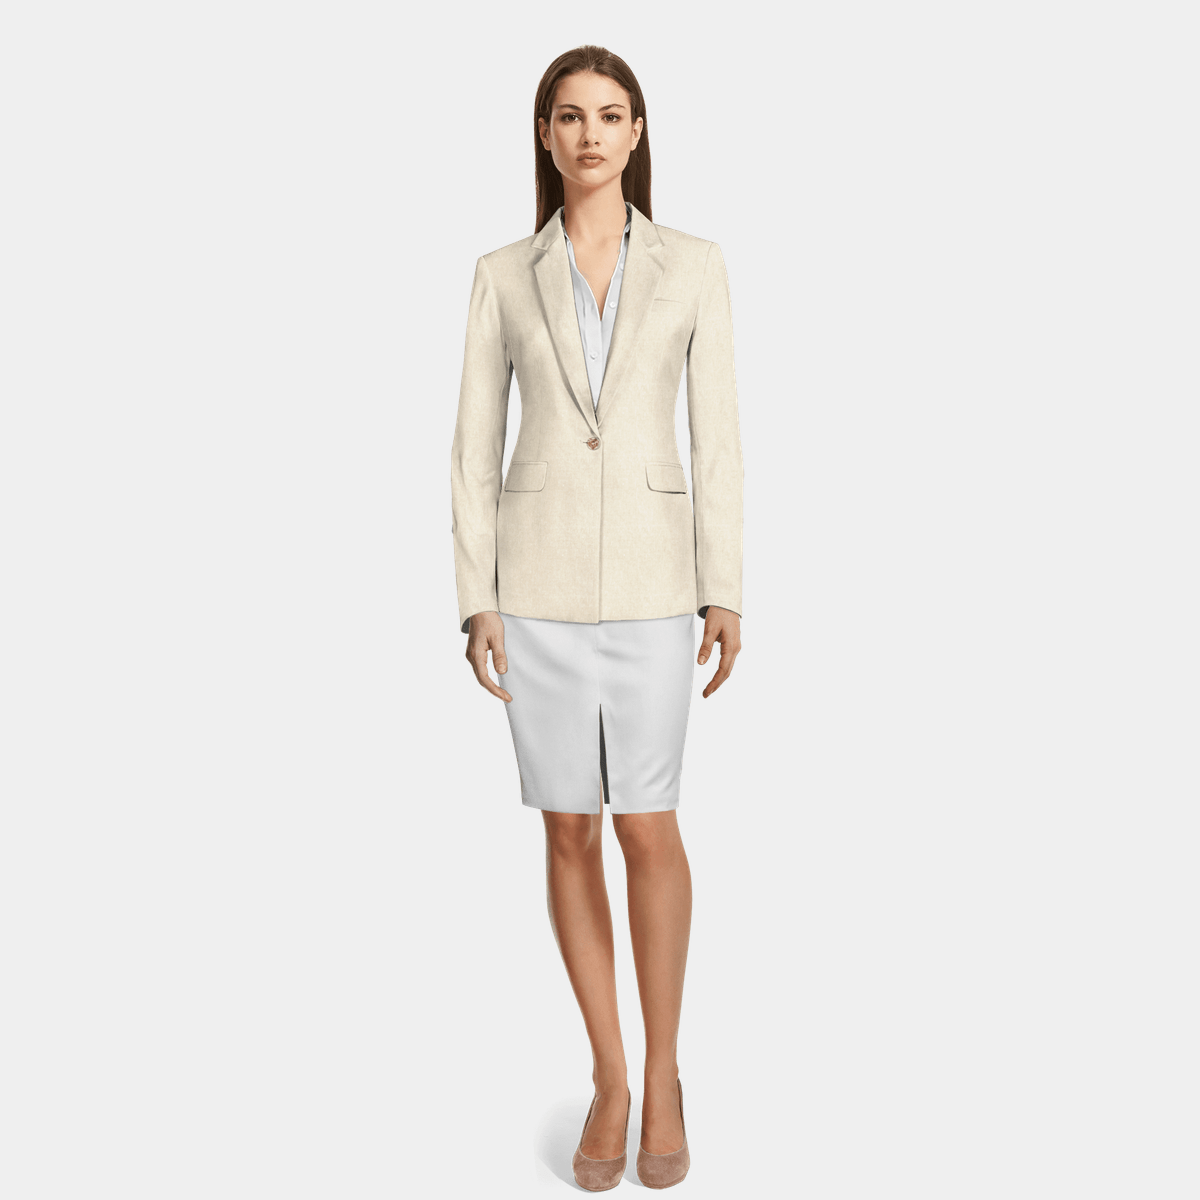 Sand linen 2-tone Skirt Suit $239 | Sumissura